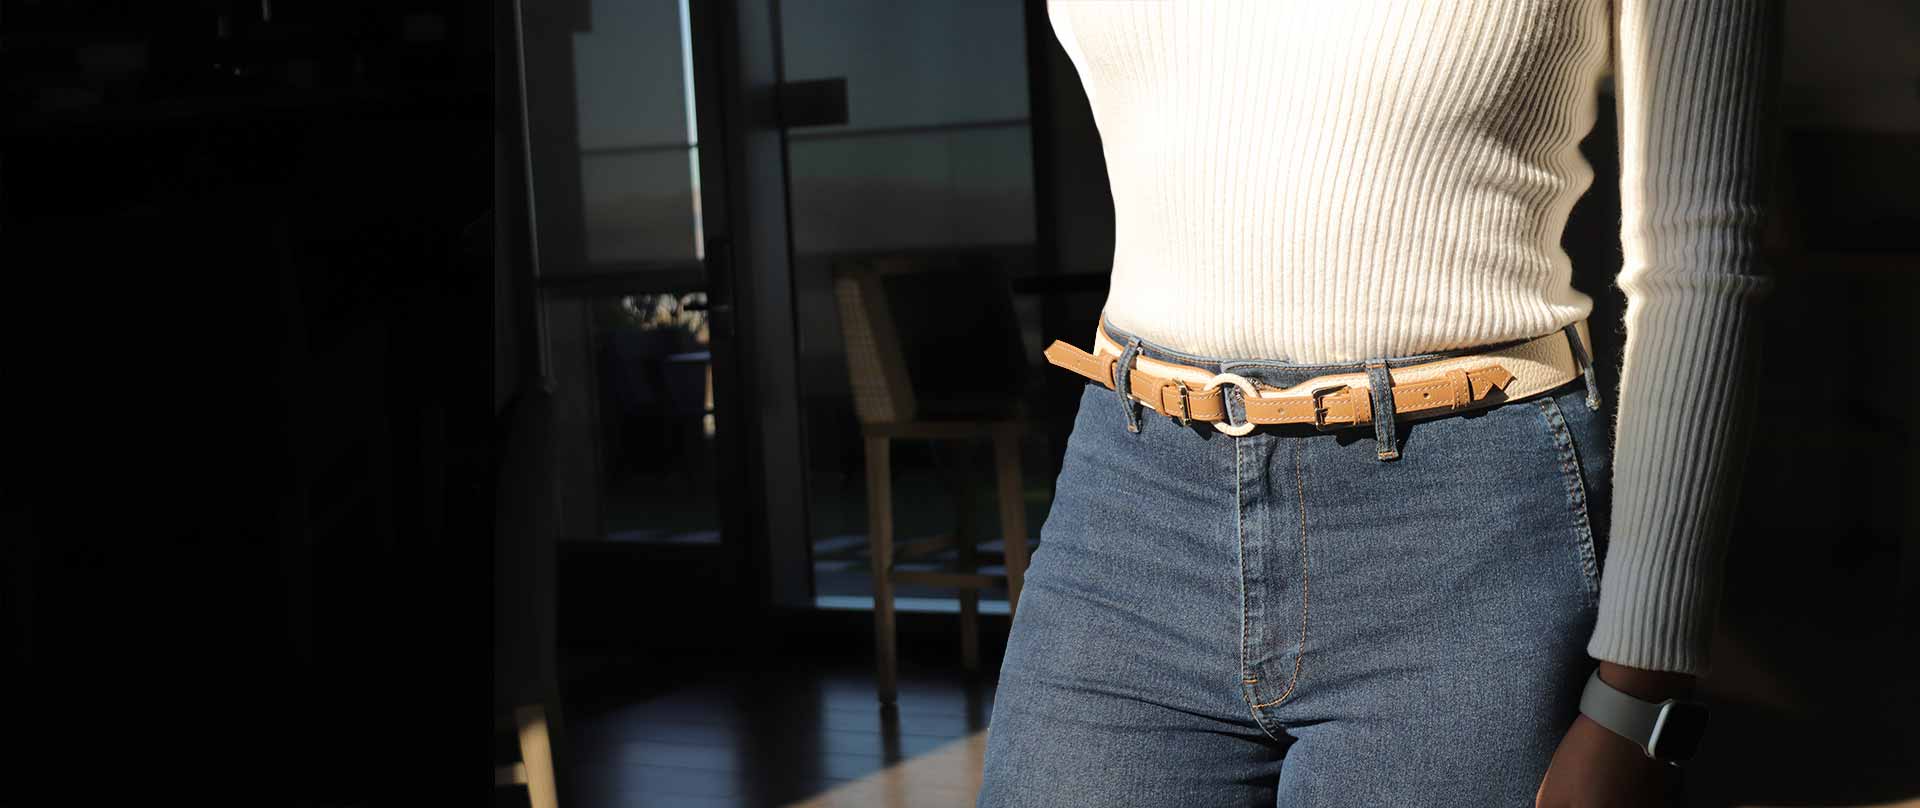 Ember sleek waist belt in beige & white leather